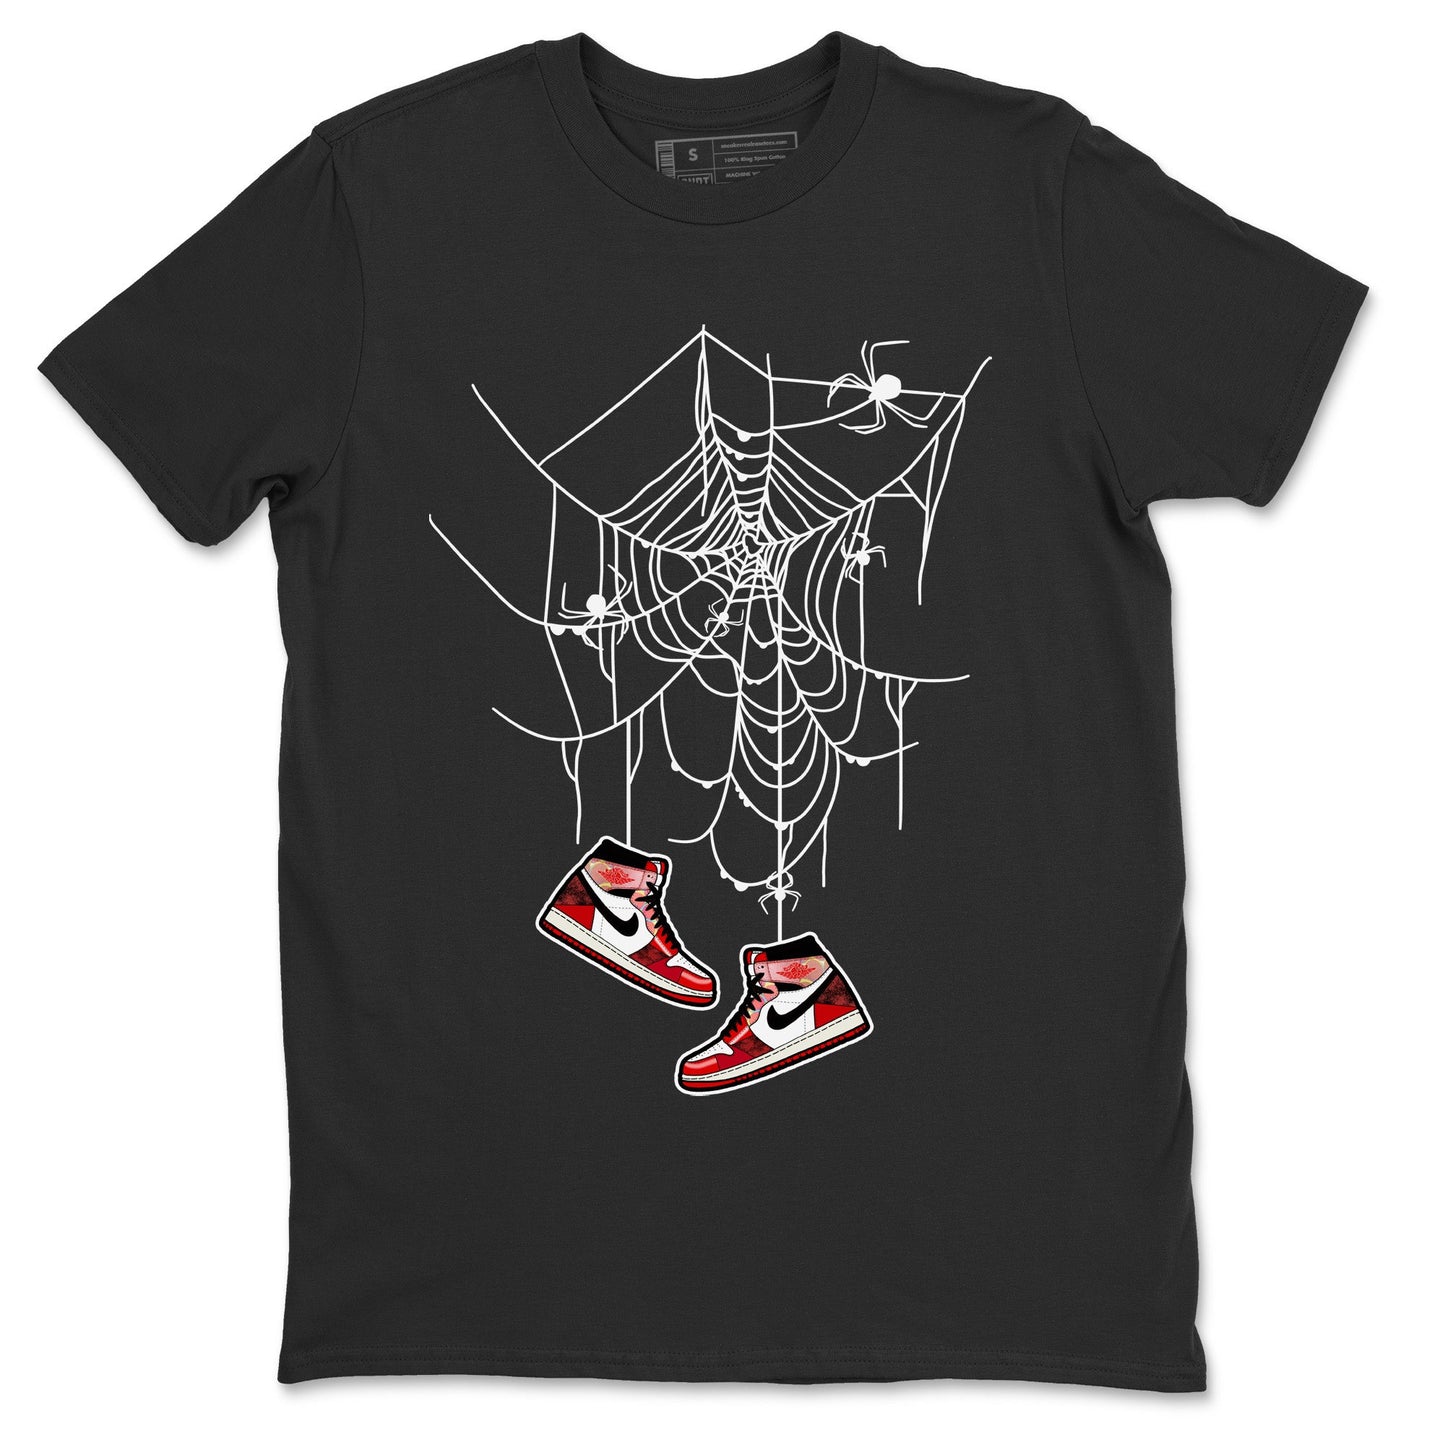 Air Jordan 1 Spider Man Sneaker Match Tees Spider Web Trap Sneaker Release Tees Air Jordan 1 High OG x Spider Man Sneaker Release Tees Unisex Shirts Black 2